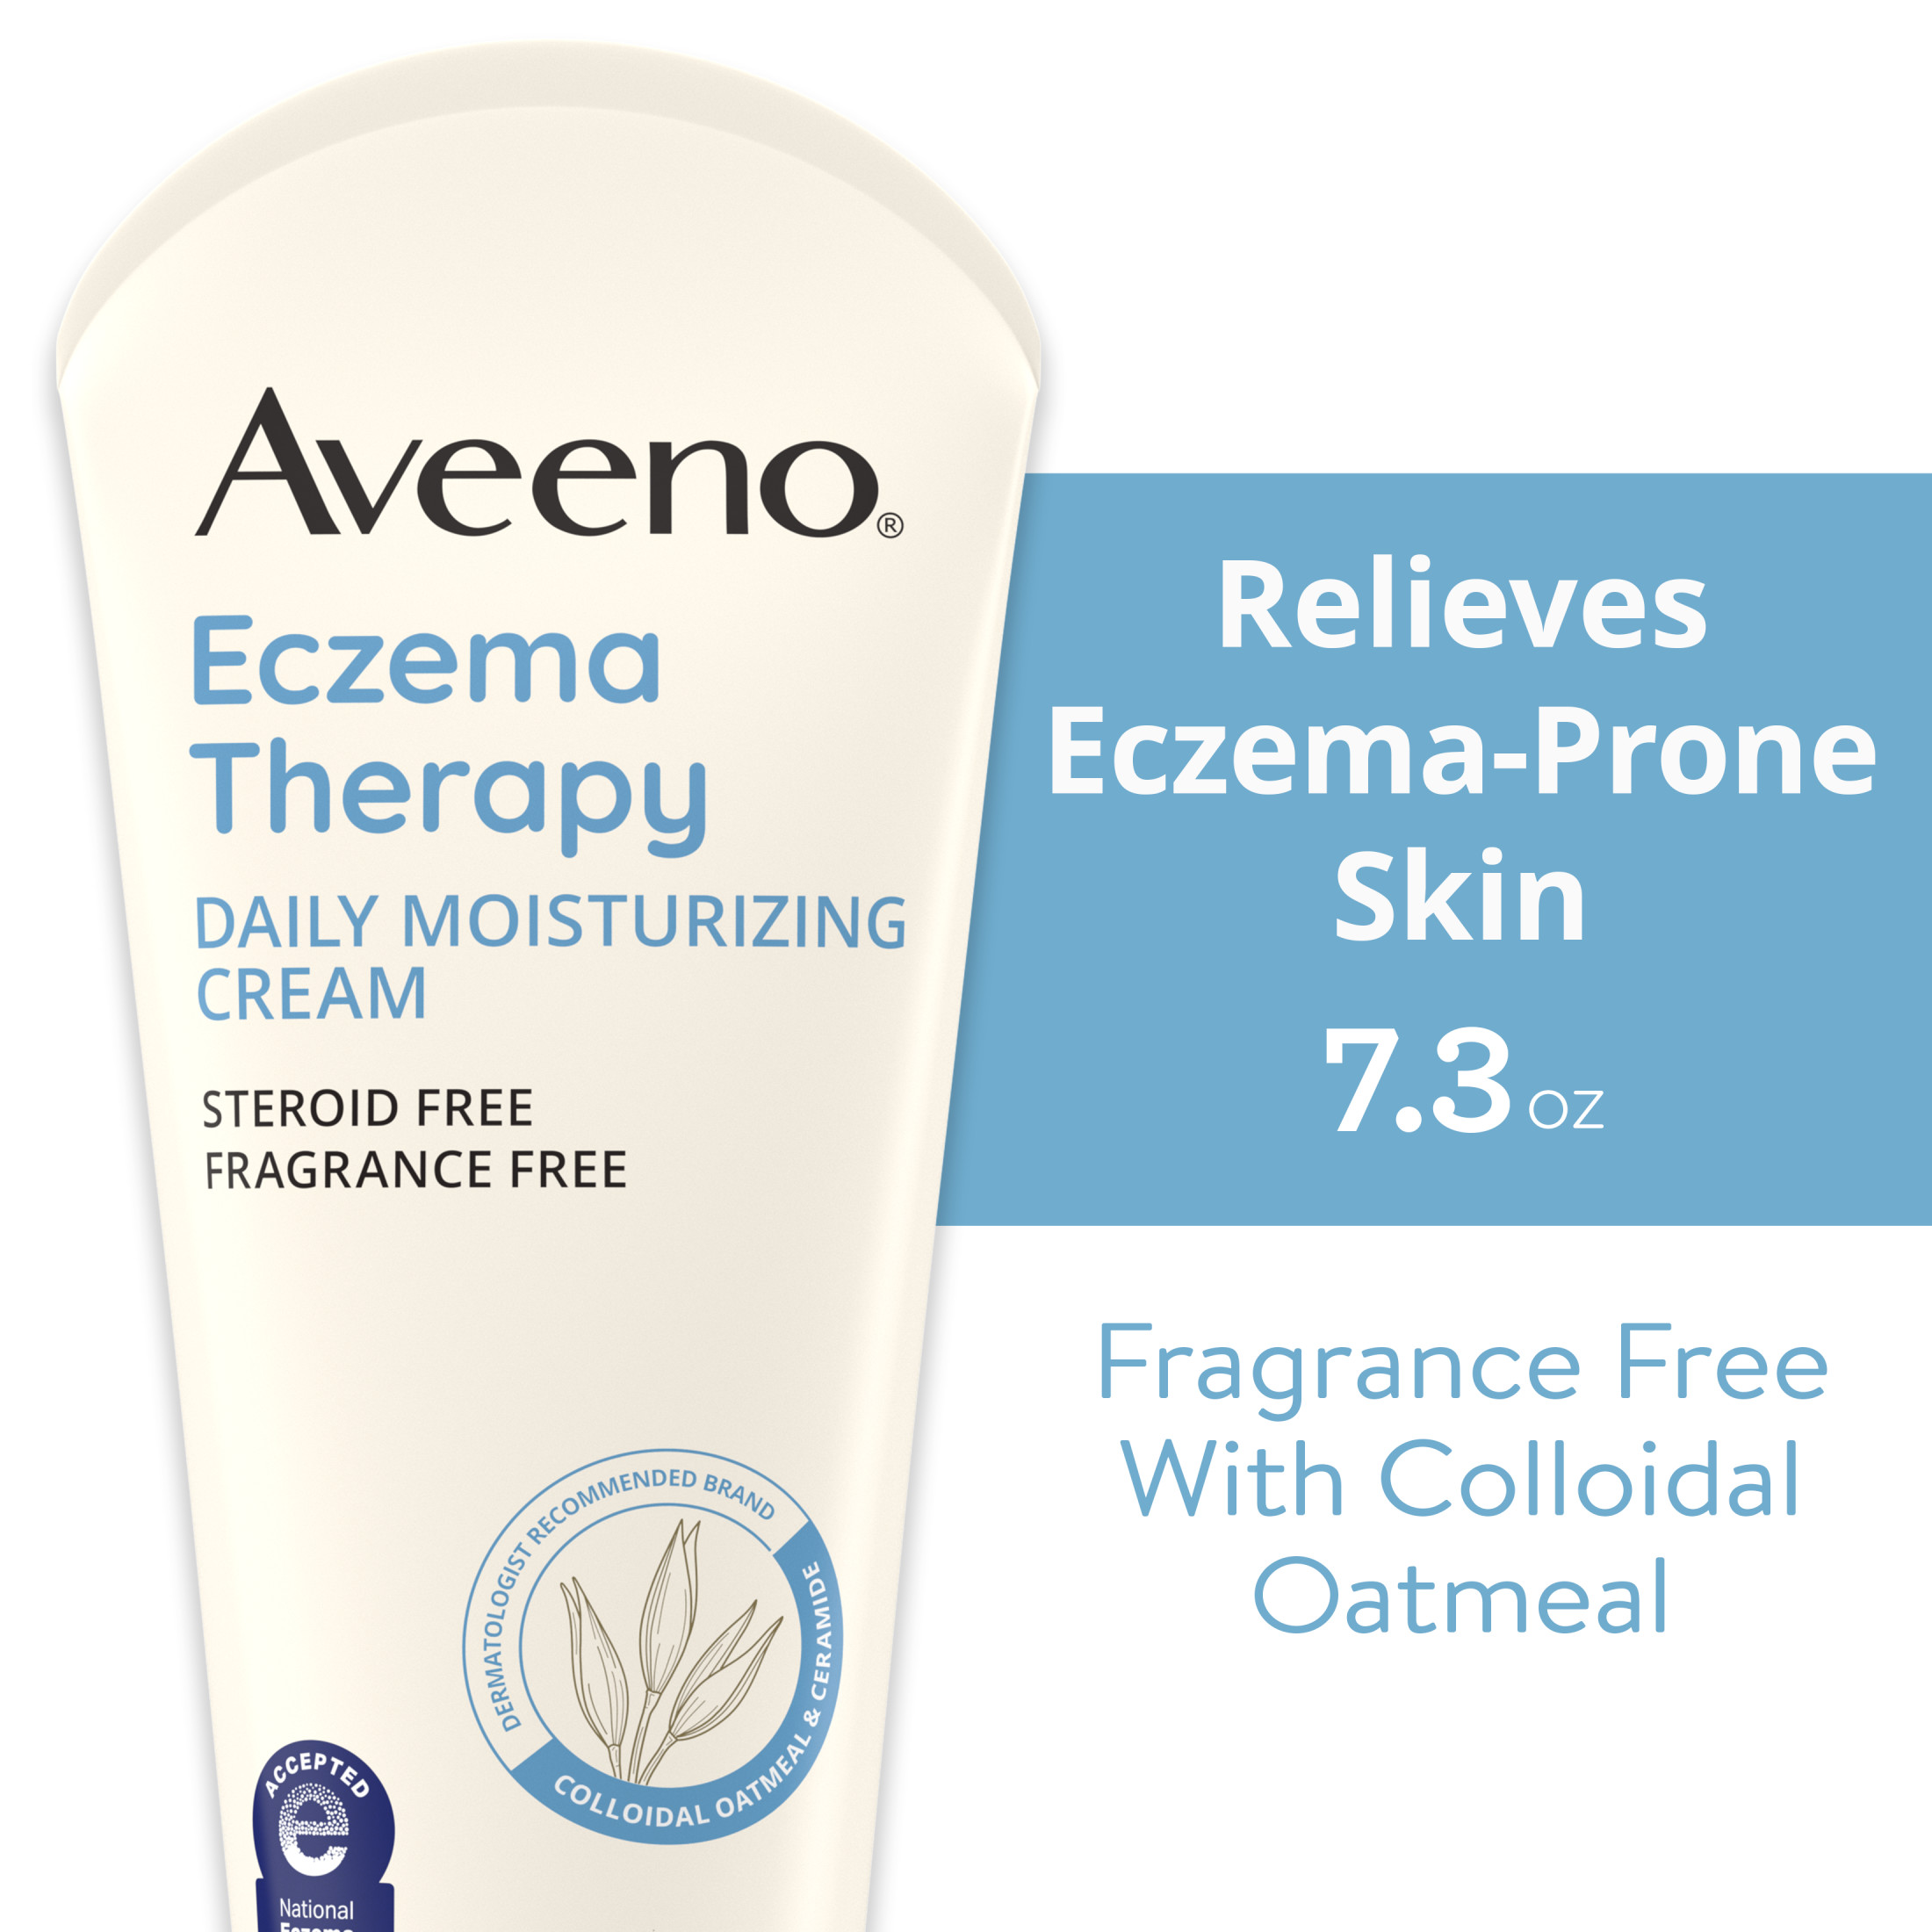 Aveeno Eczema Therapy Daily Moisturizing Body Lotion, Fragrance Free Cream, 7.3 oz - image 1 of 11